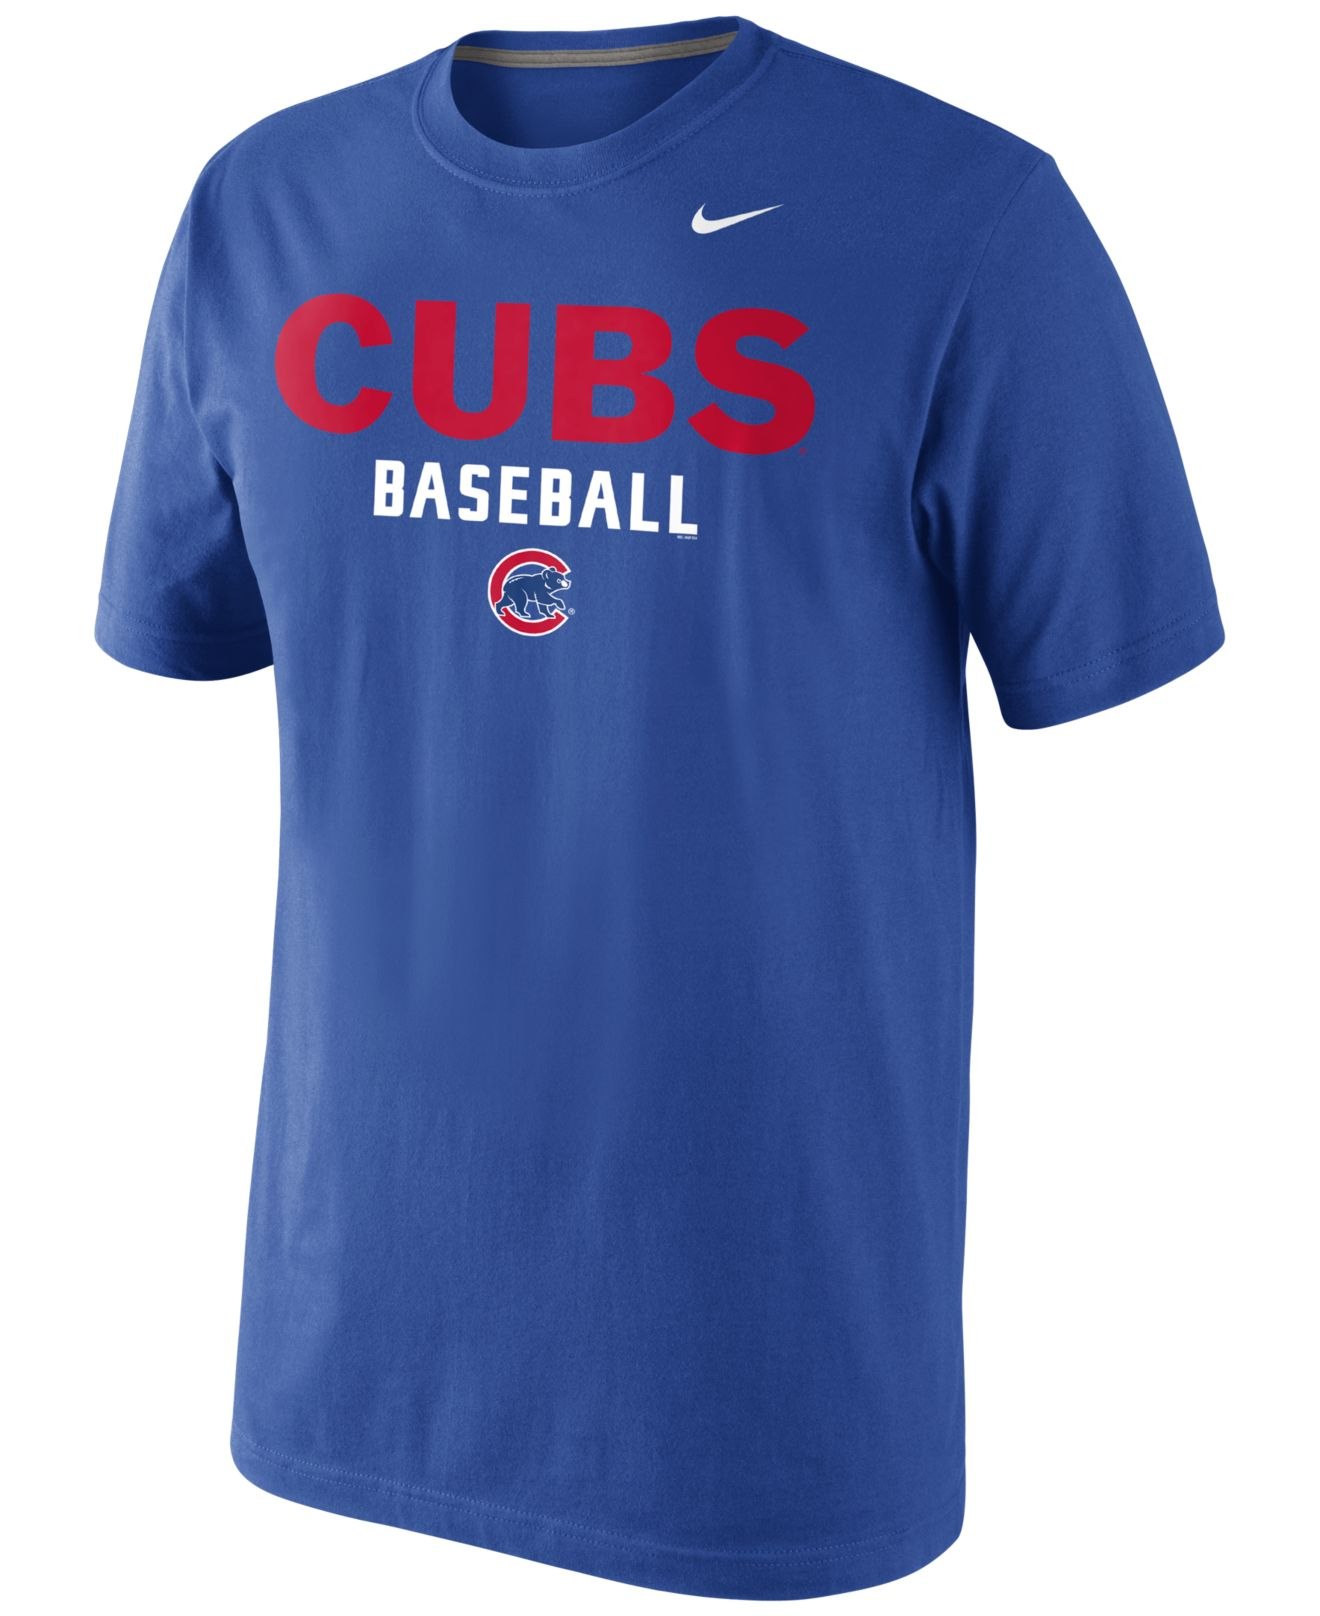 Lyst - Nike Men's Chicago Cubs Practice T-shirt in Blue for Men